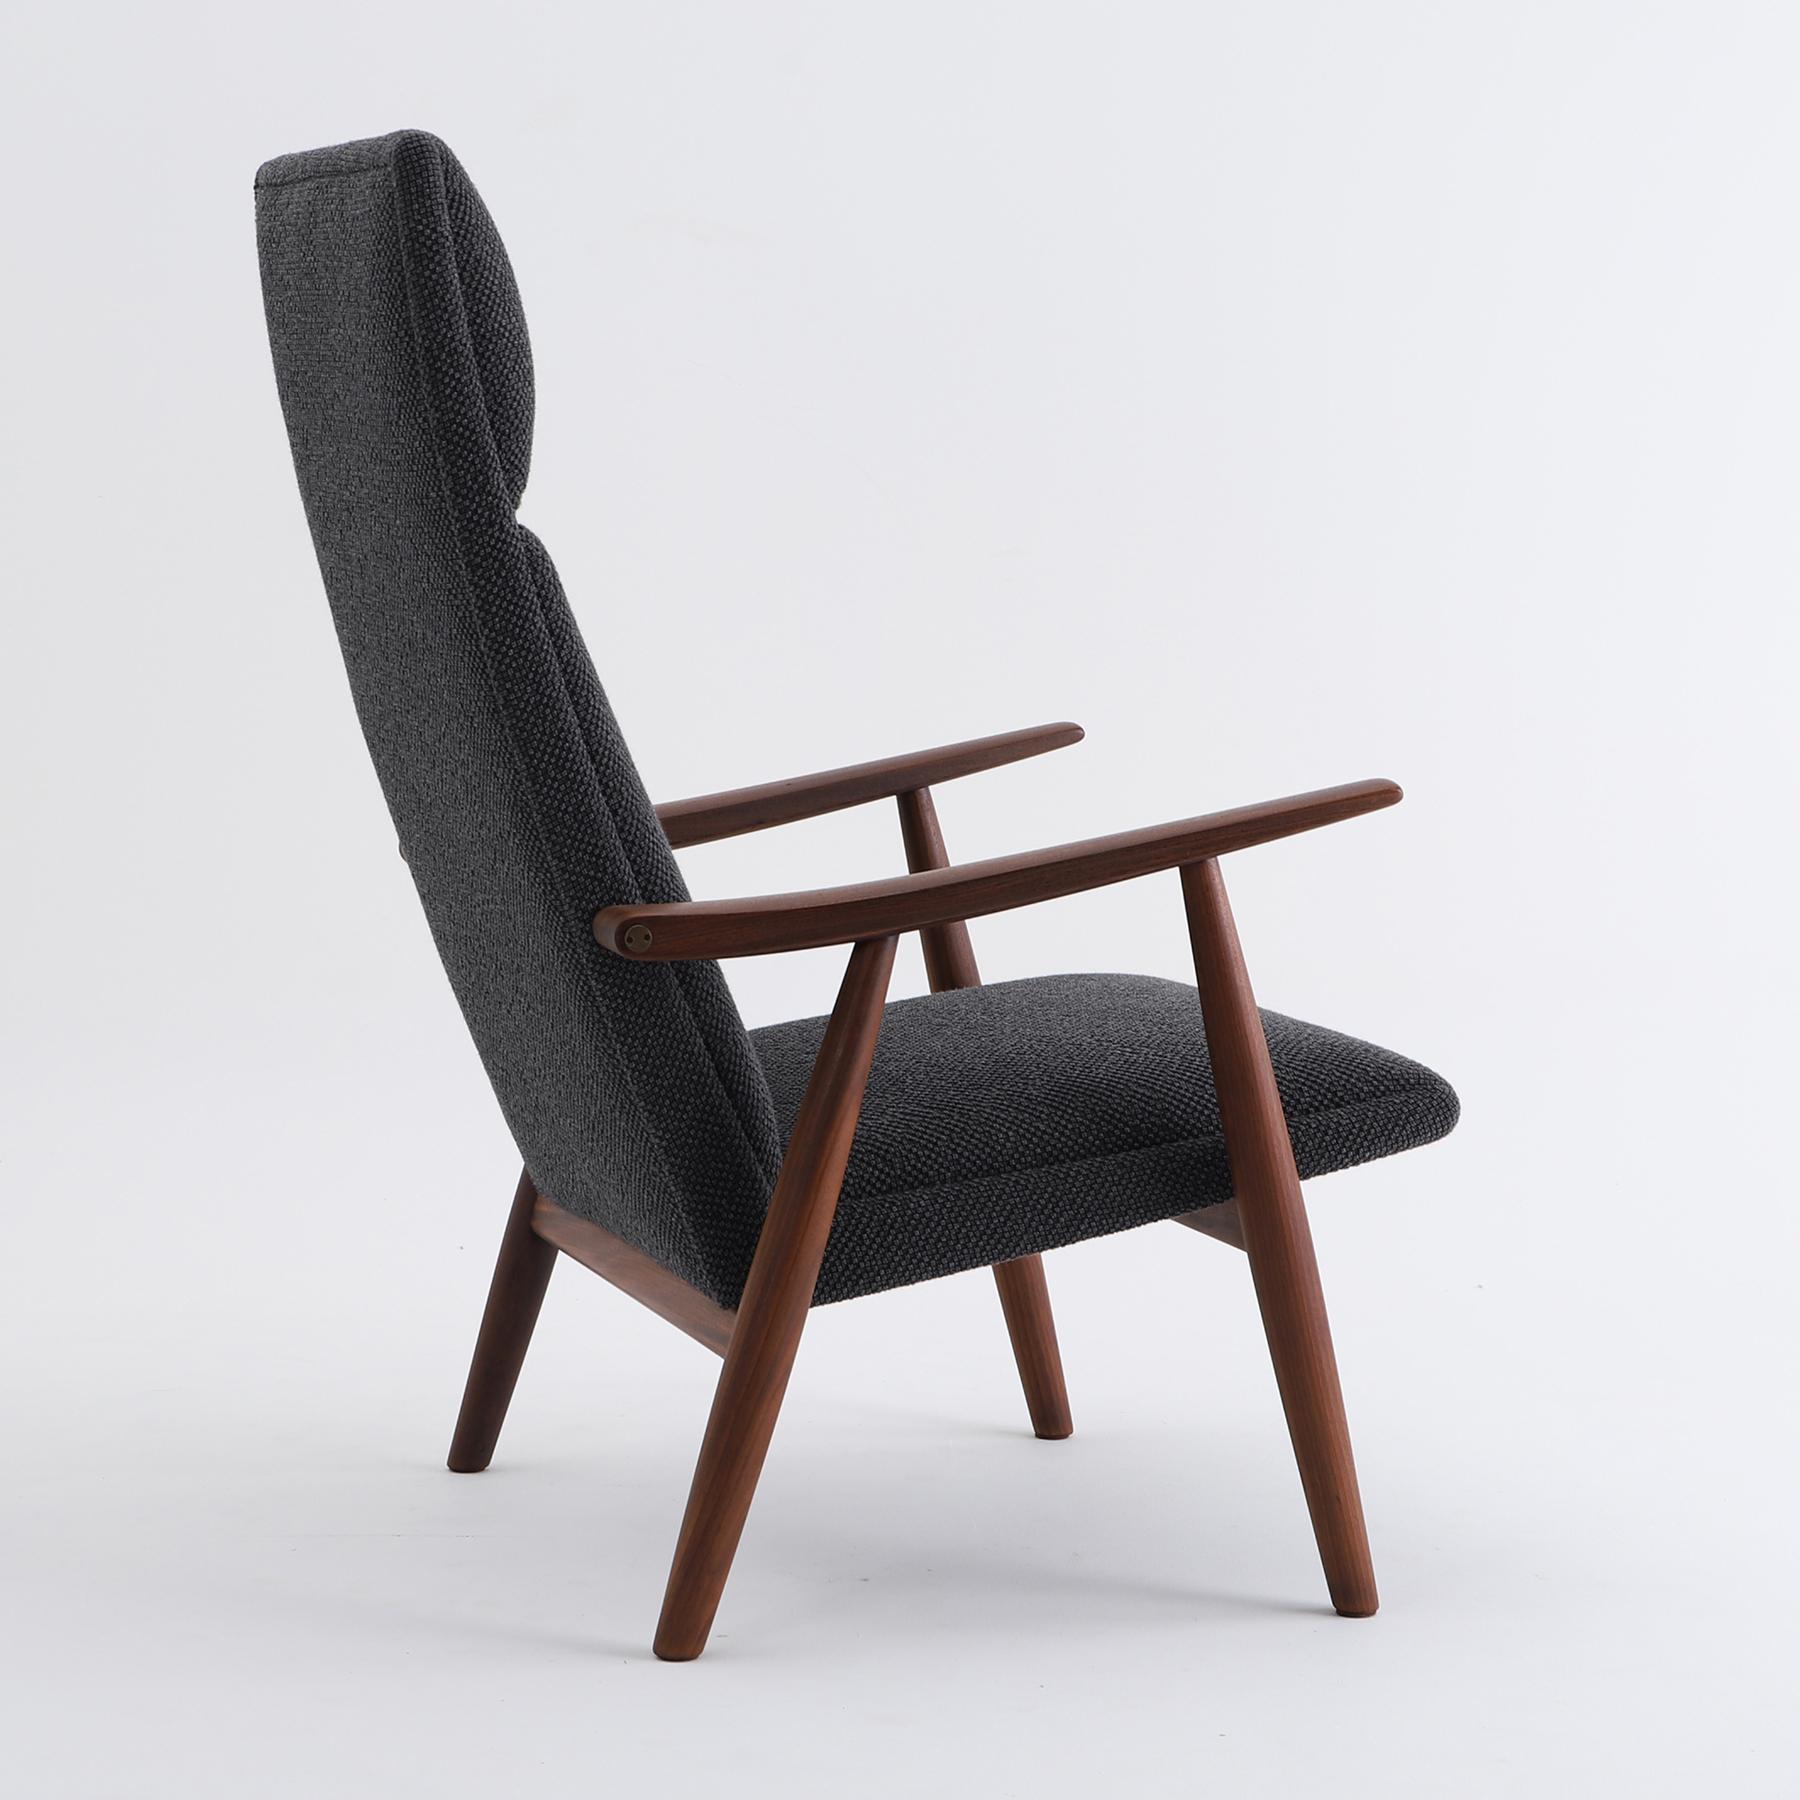 Scandinavian Modern Hans J. Wegner / Easy chair. GE-260A / GETAMA